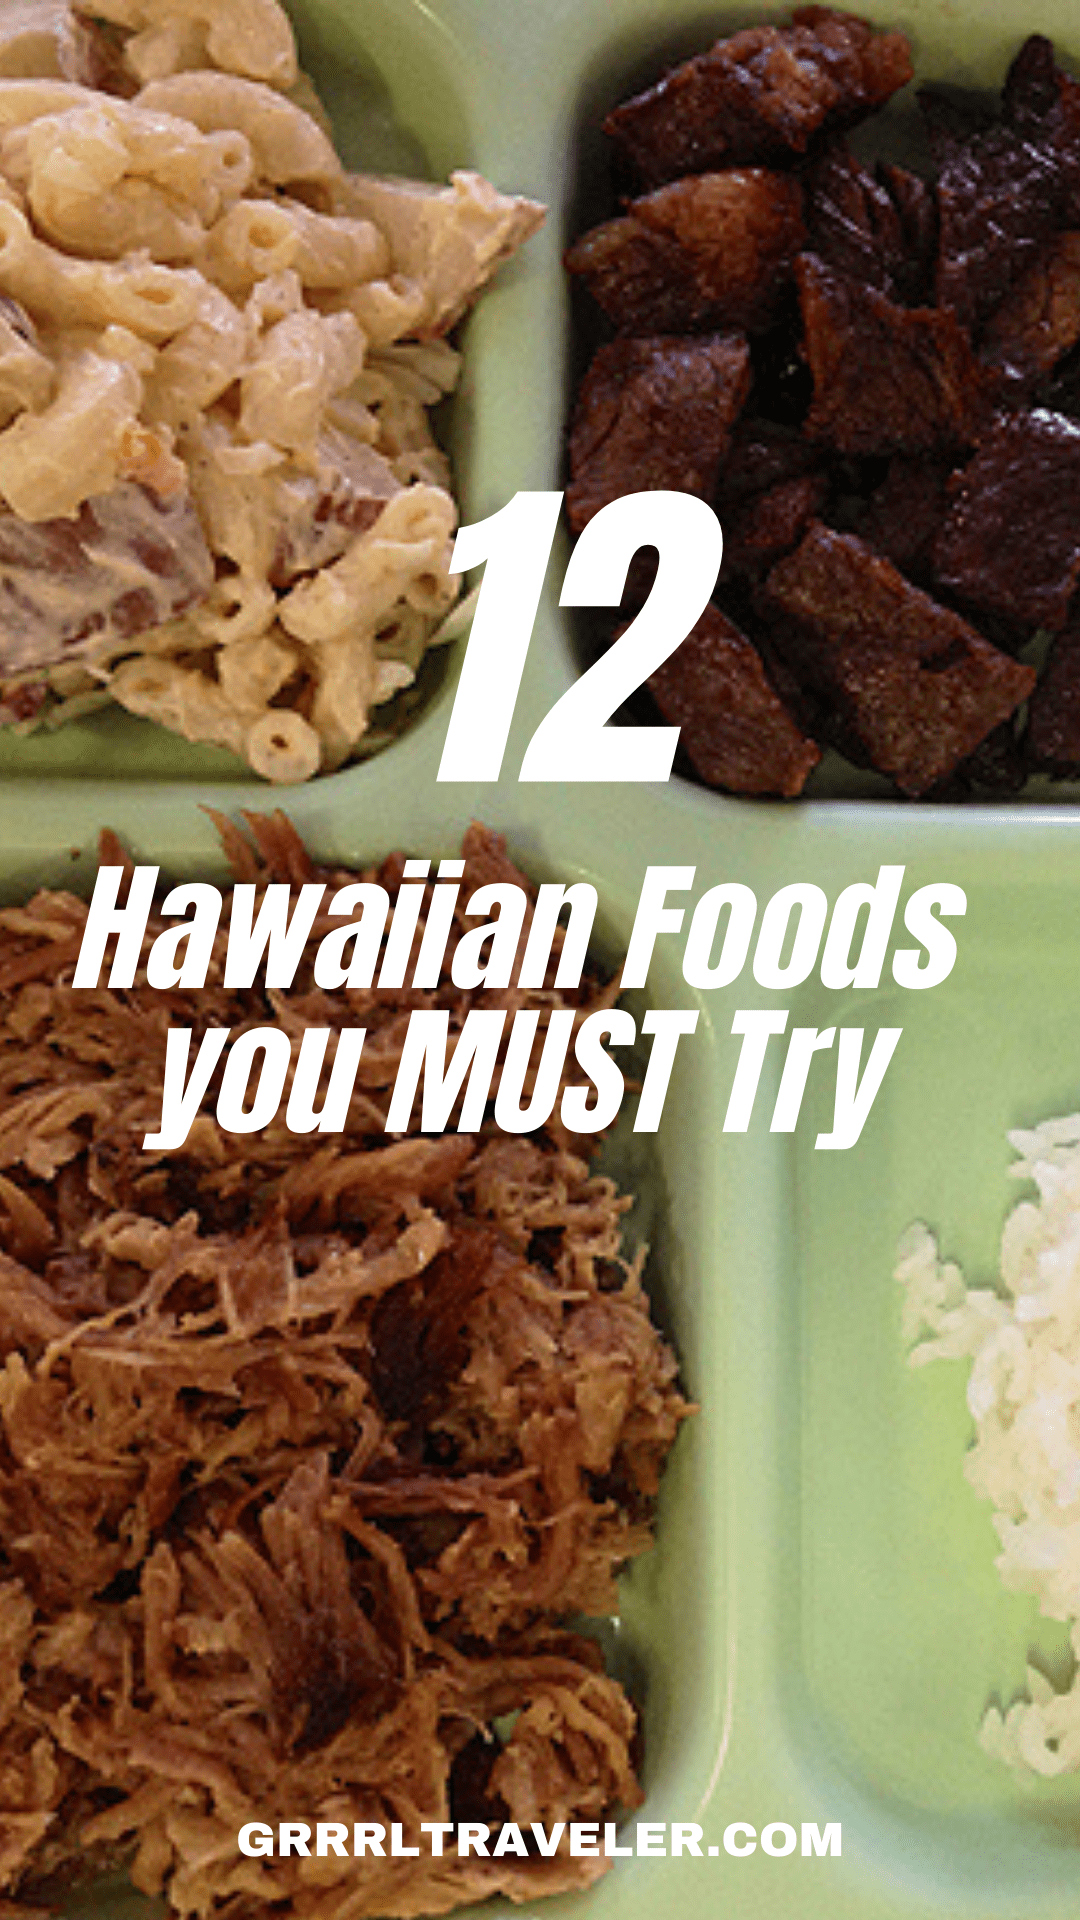 famous Hawaiian foods to try